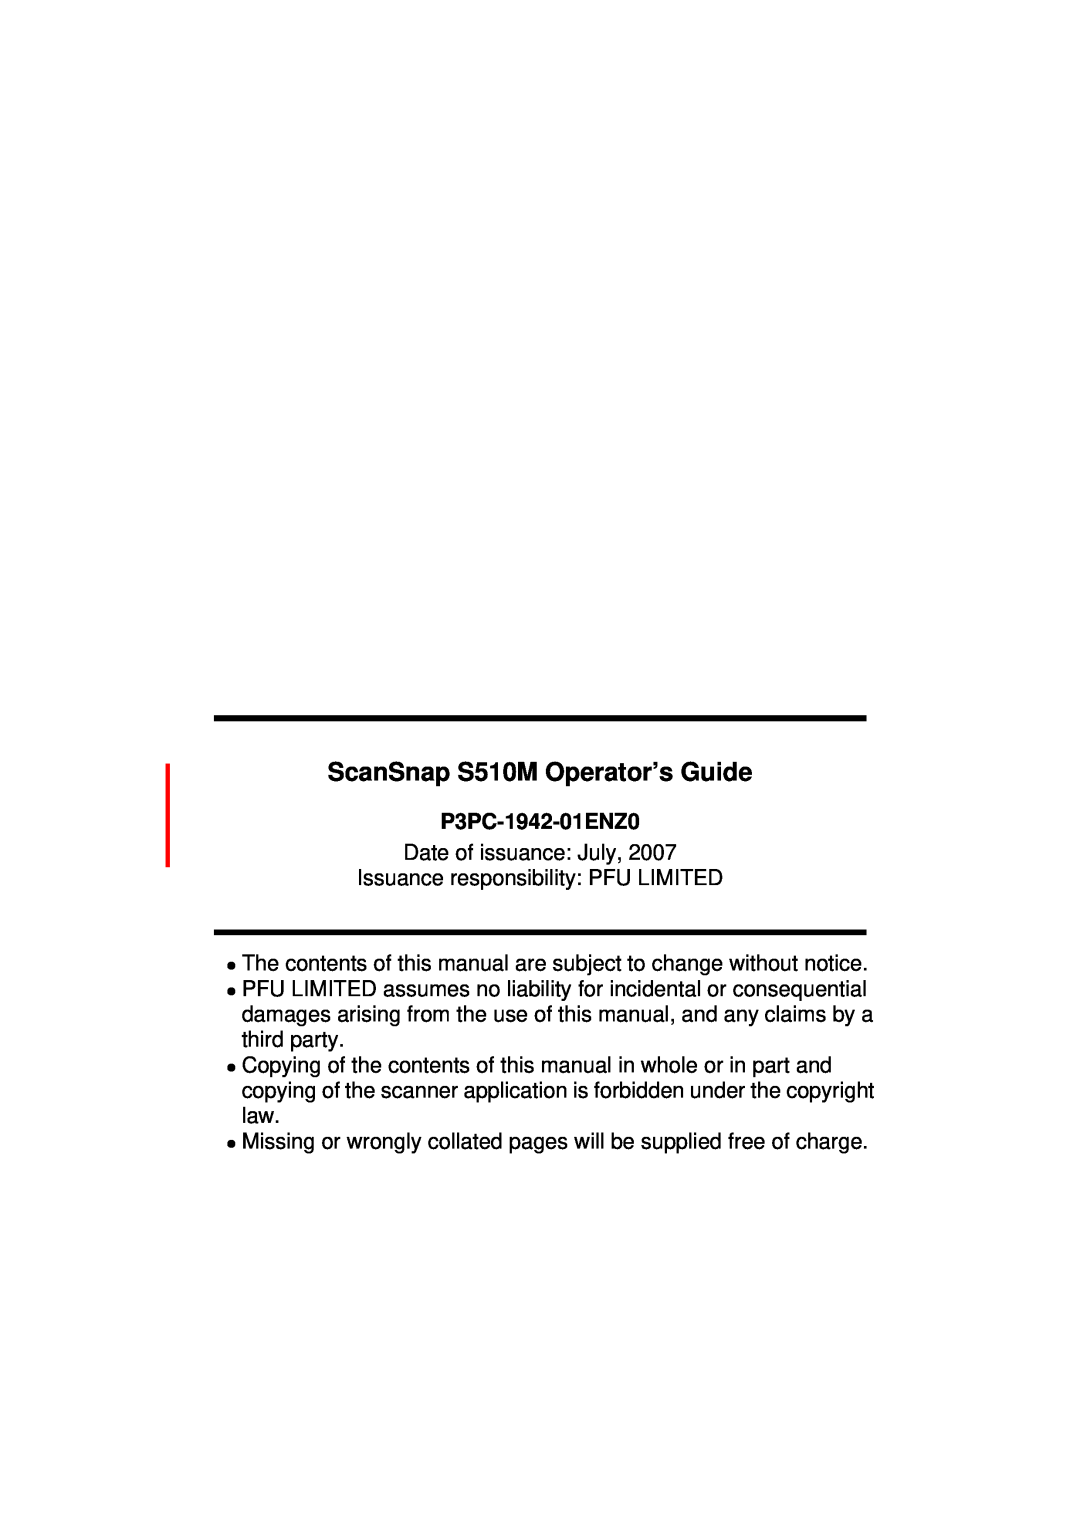 Fujitsu manual ScanSnap S510M Operator’s Guide, P3PC-1942-01ENZ0 